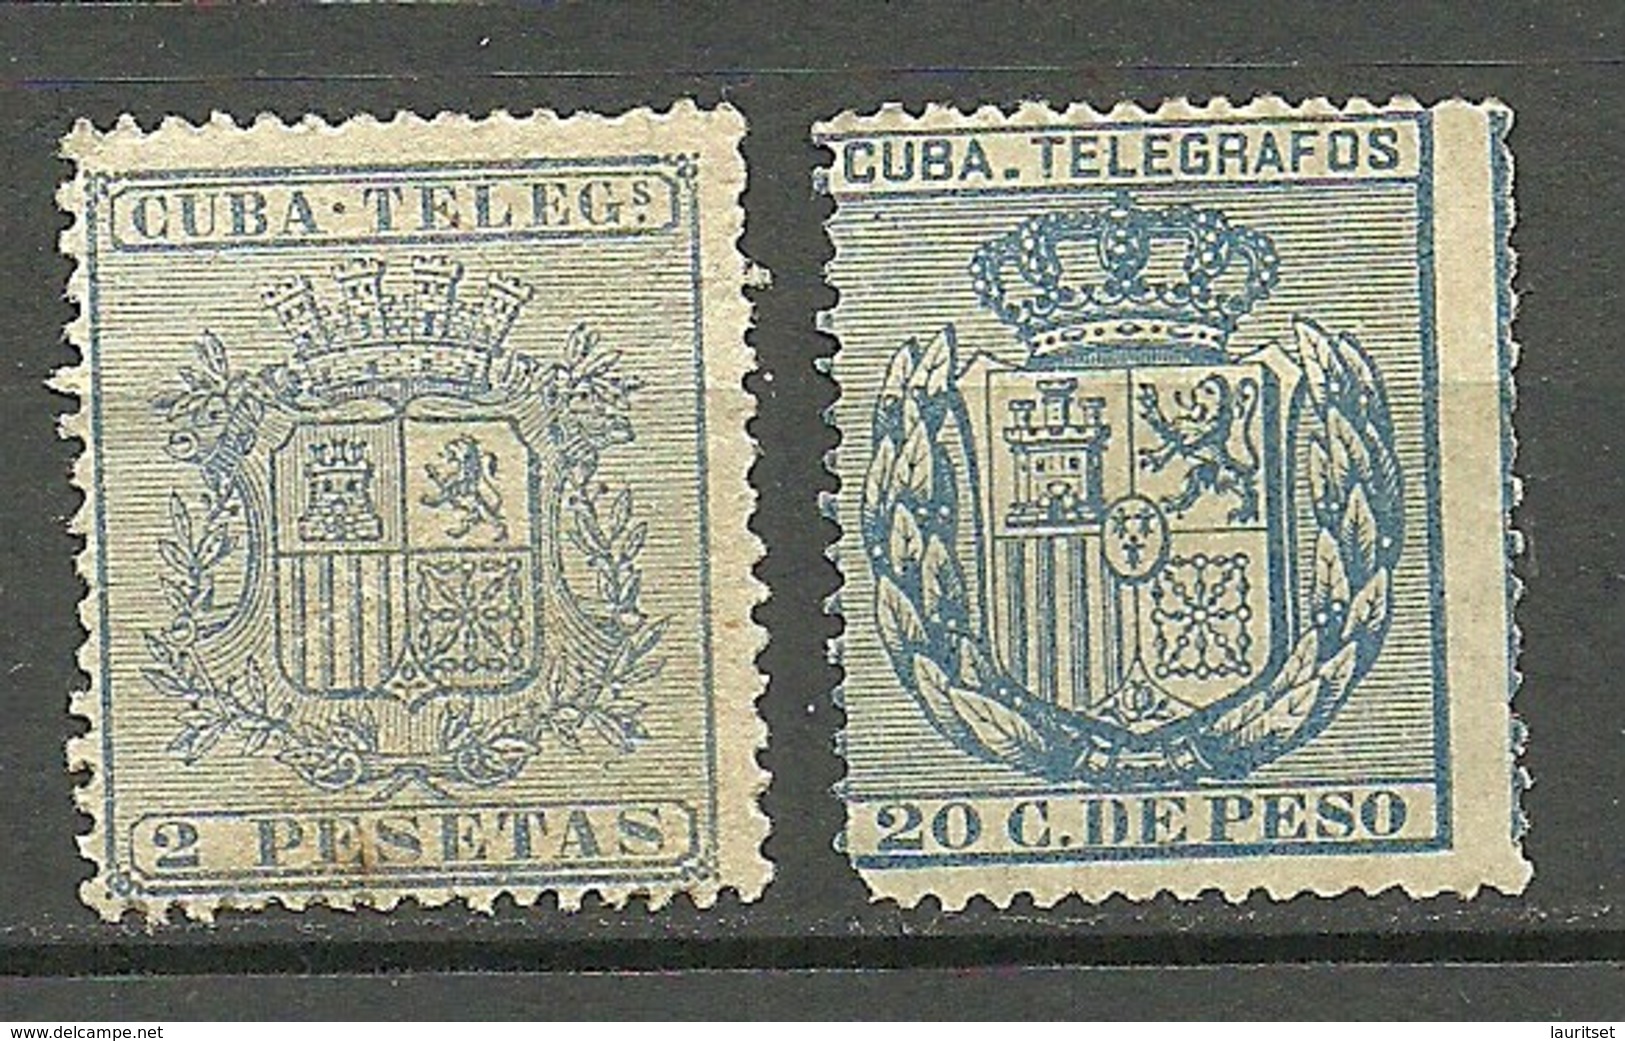 KUBA Cuba Old Telegraph Stamps (*) - Telegraph